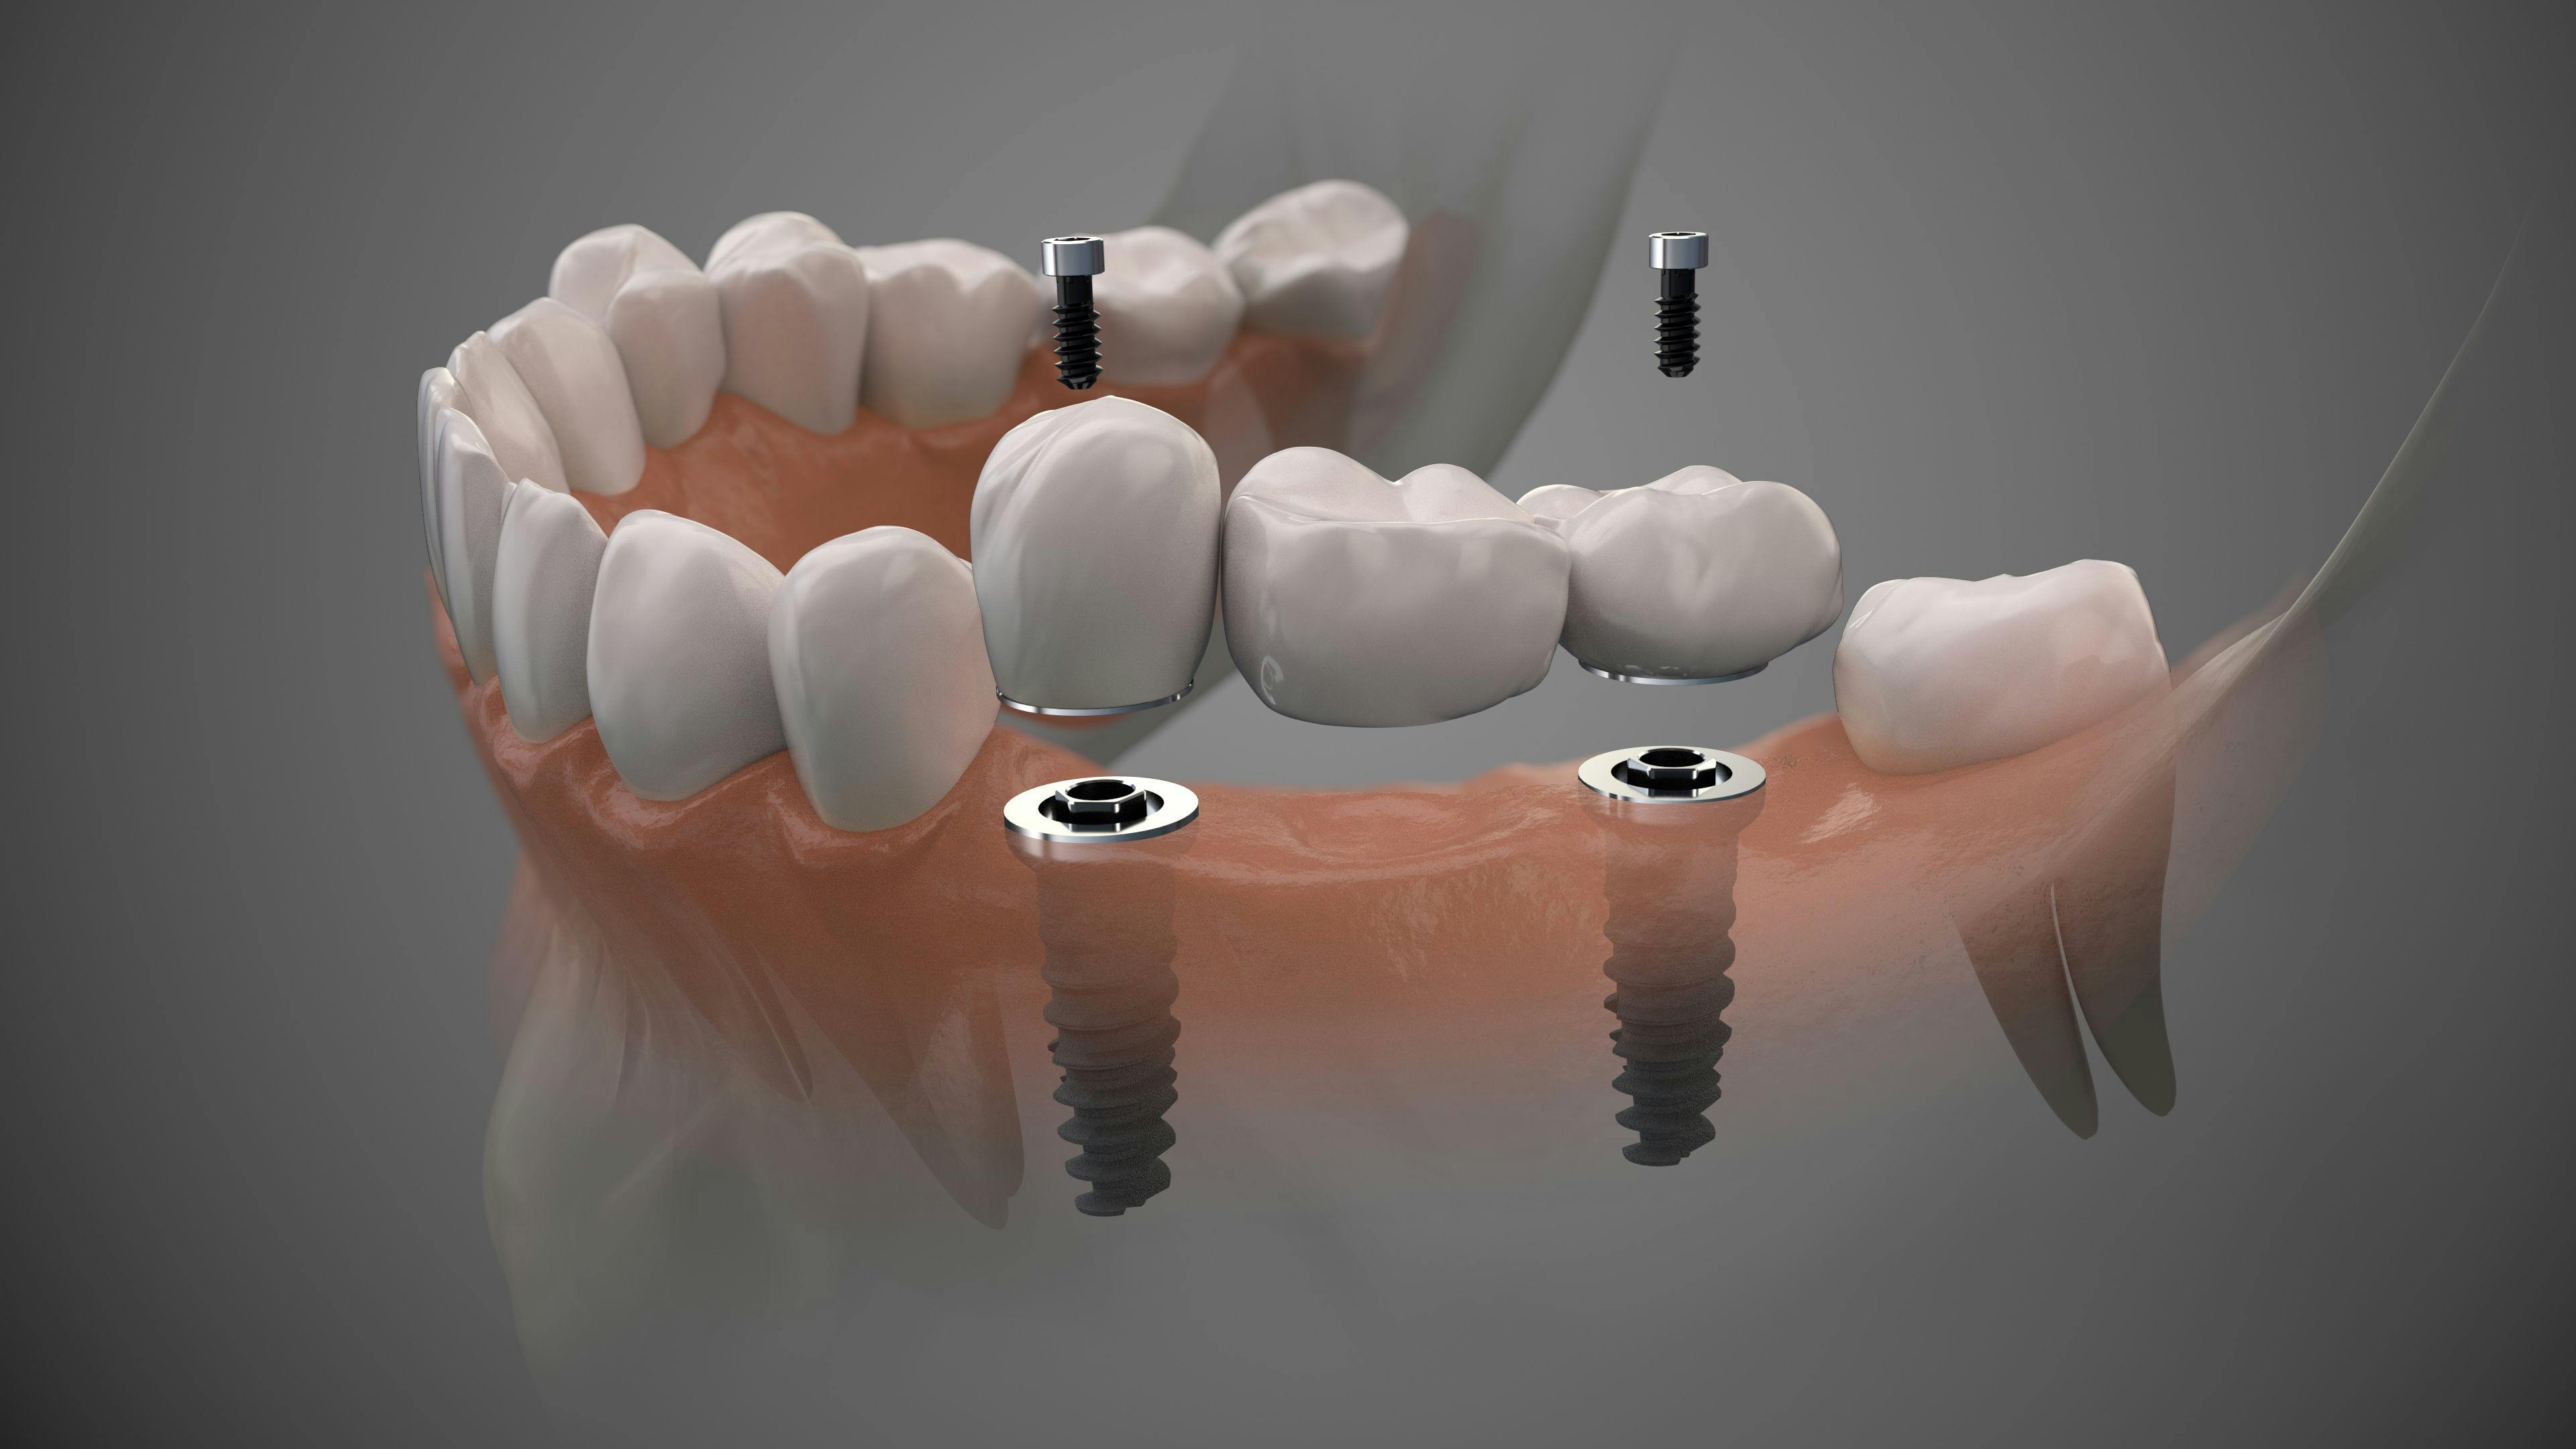 screw-retained dental implant bridge – labden / stock.adobe.com